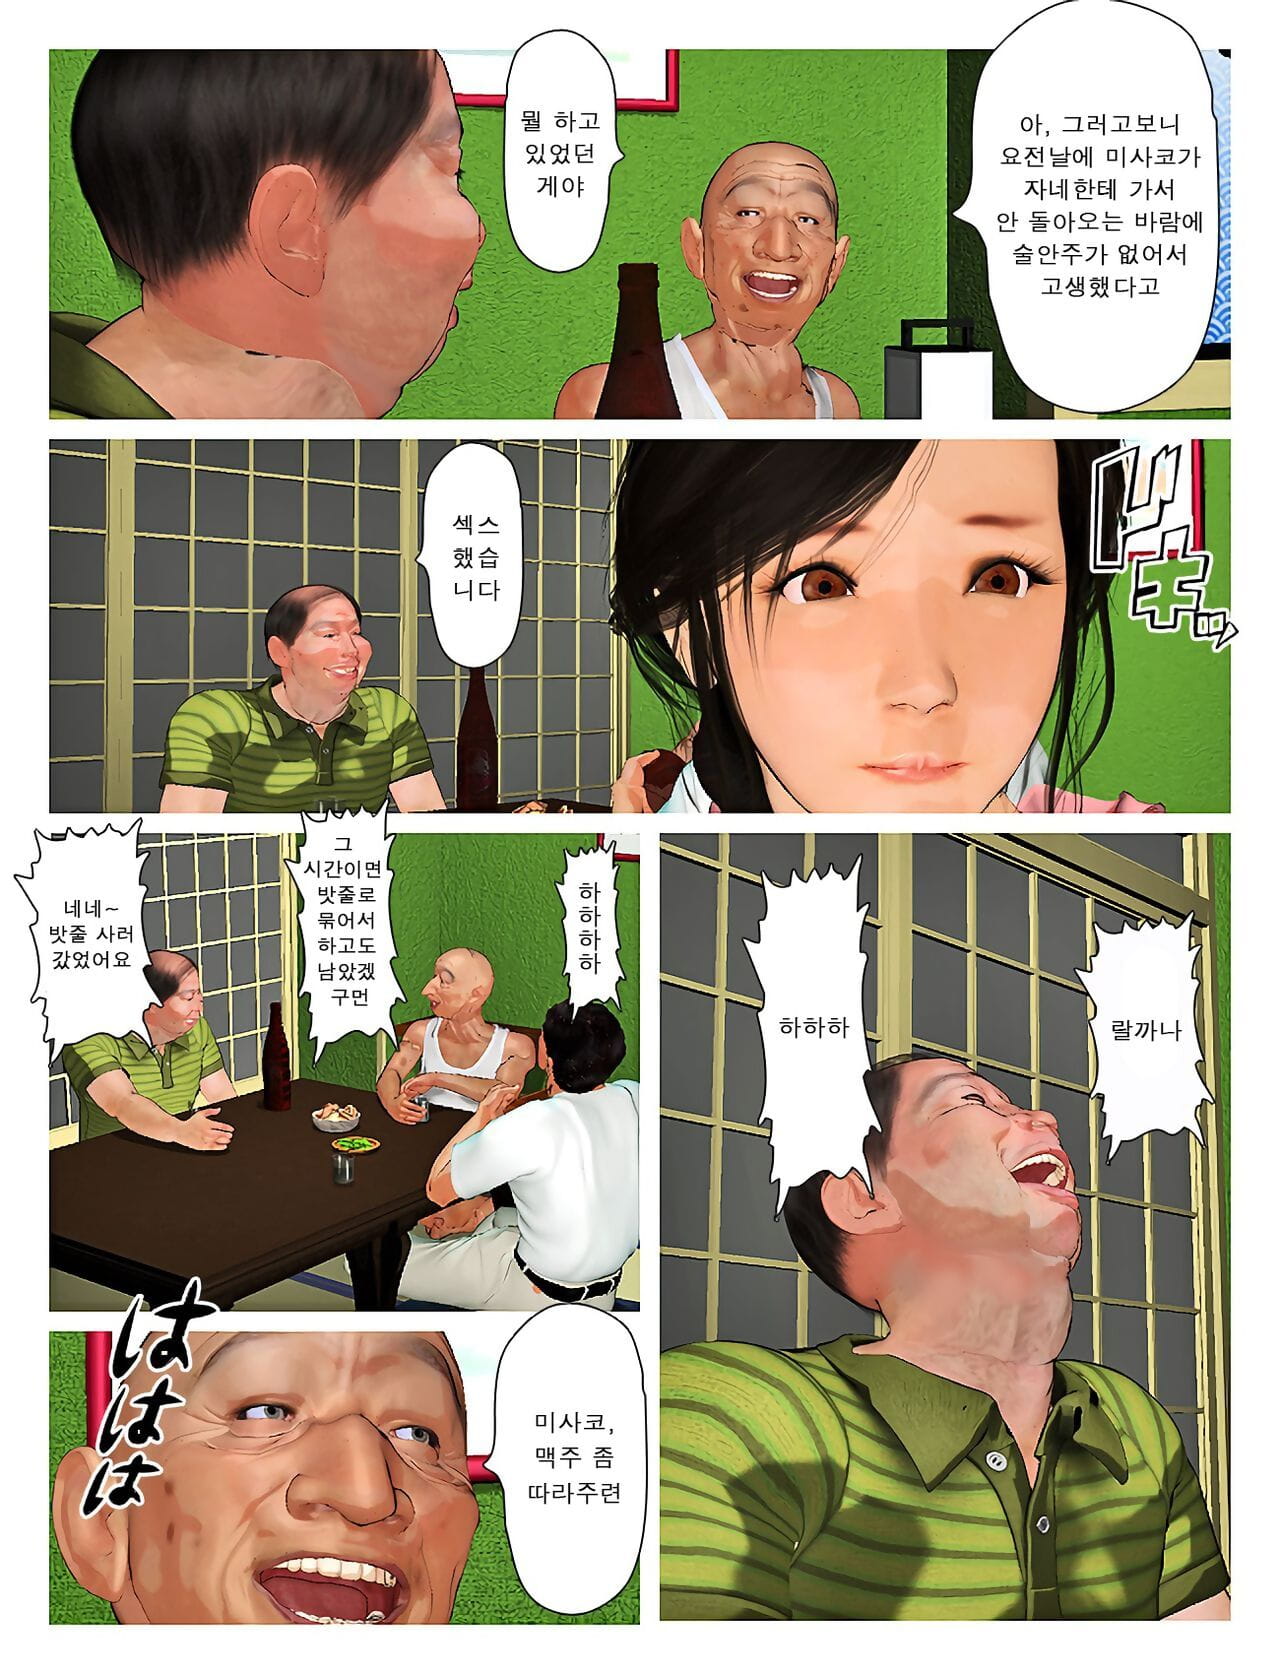 kyou nenhum misako san 2019:3 오늘의 미사코씨 2019:3 parte 2 page 1